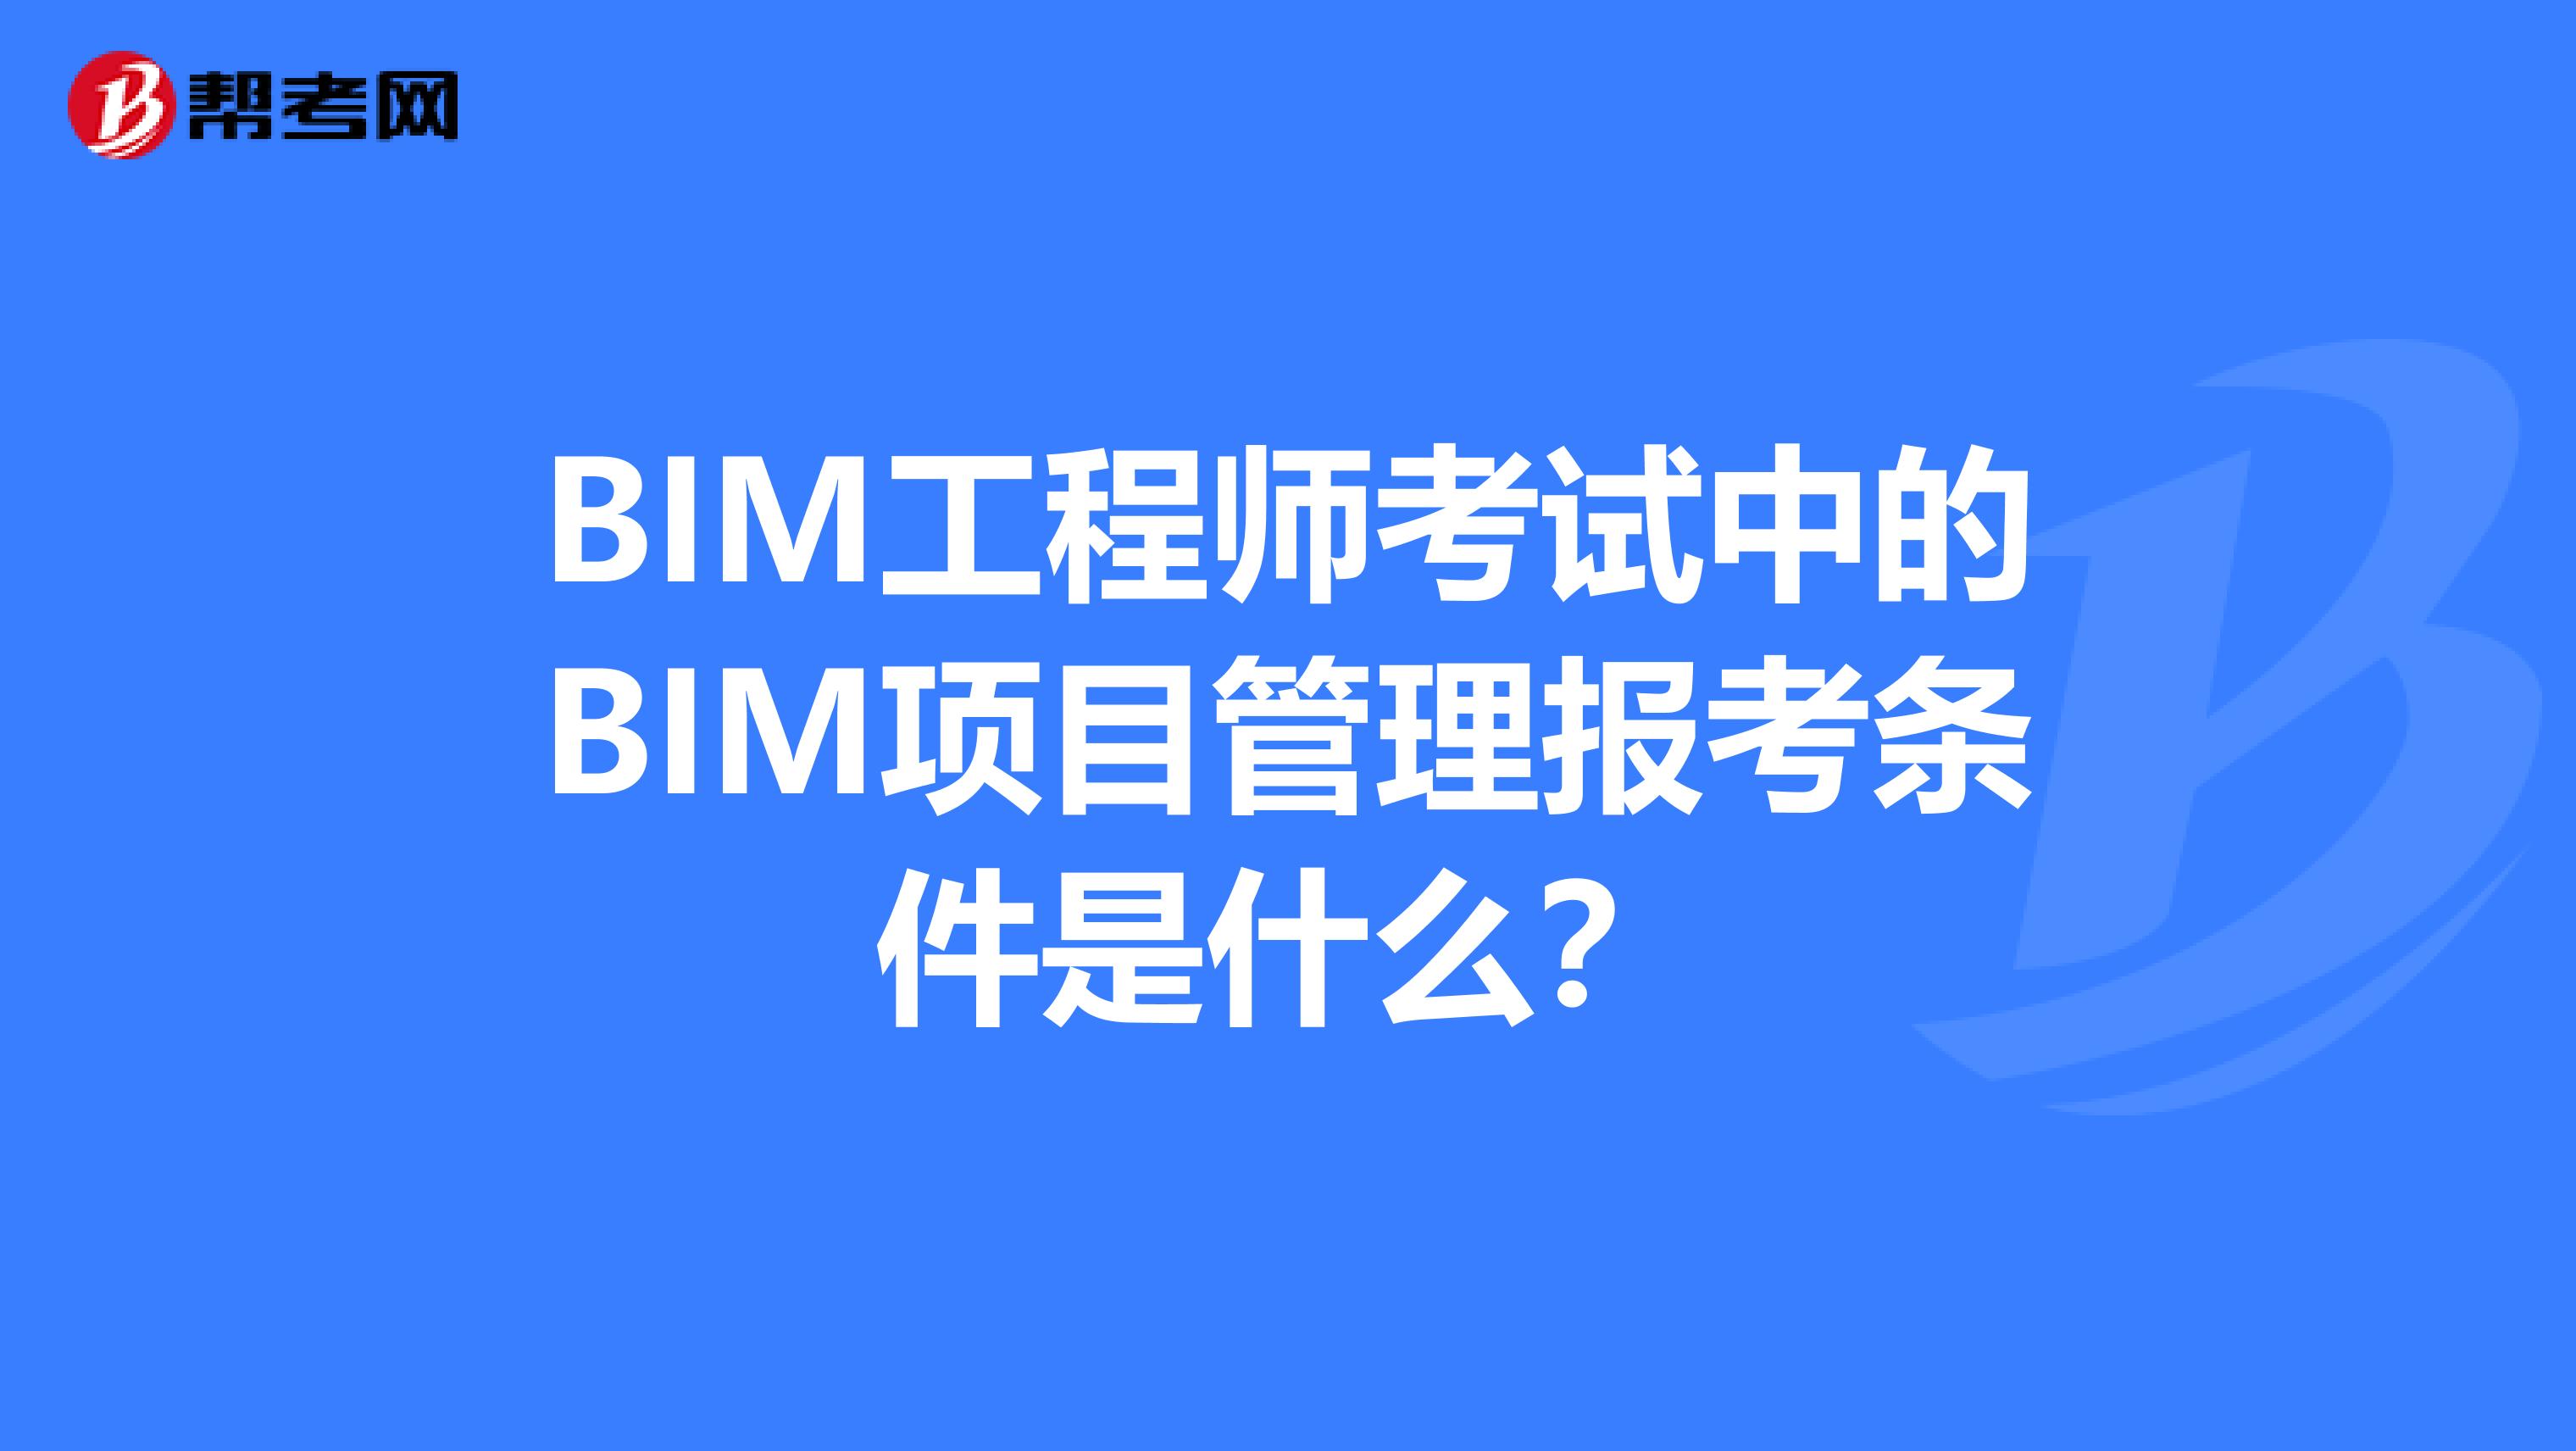 bim工程师考试要求,bim工程师证书报考要求  第1张